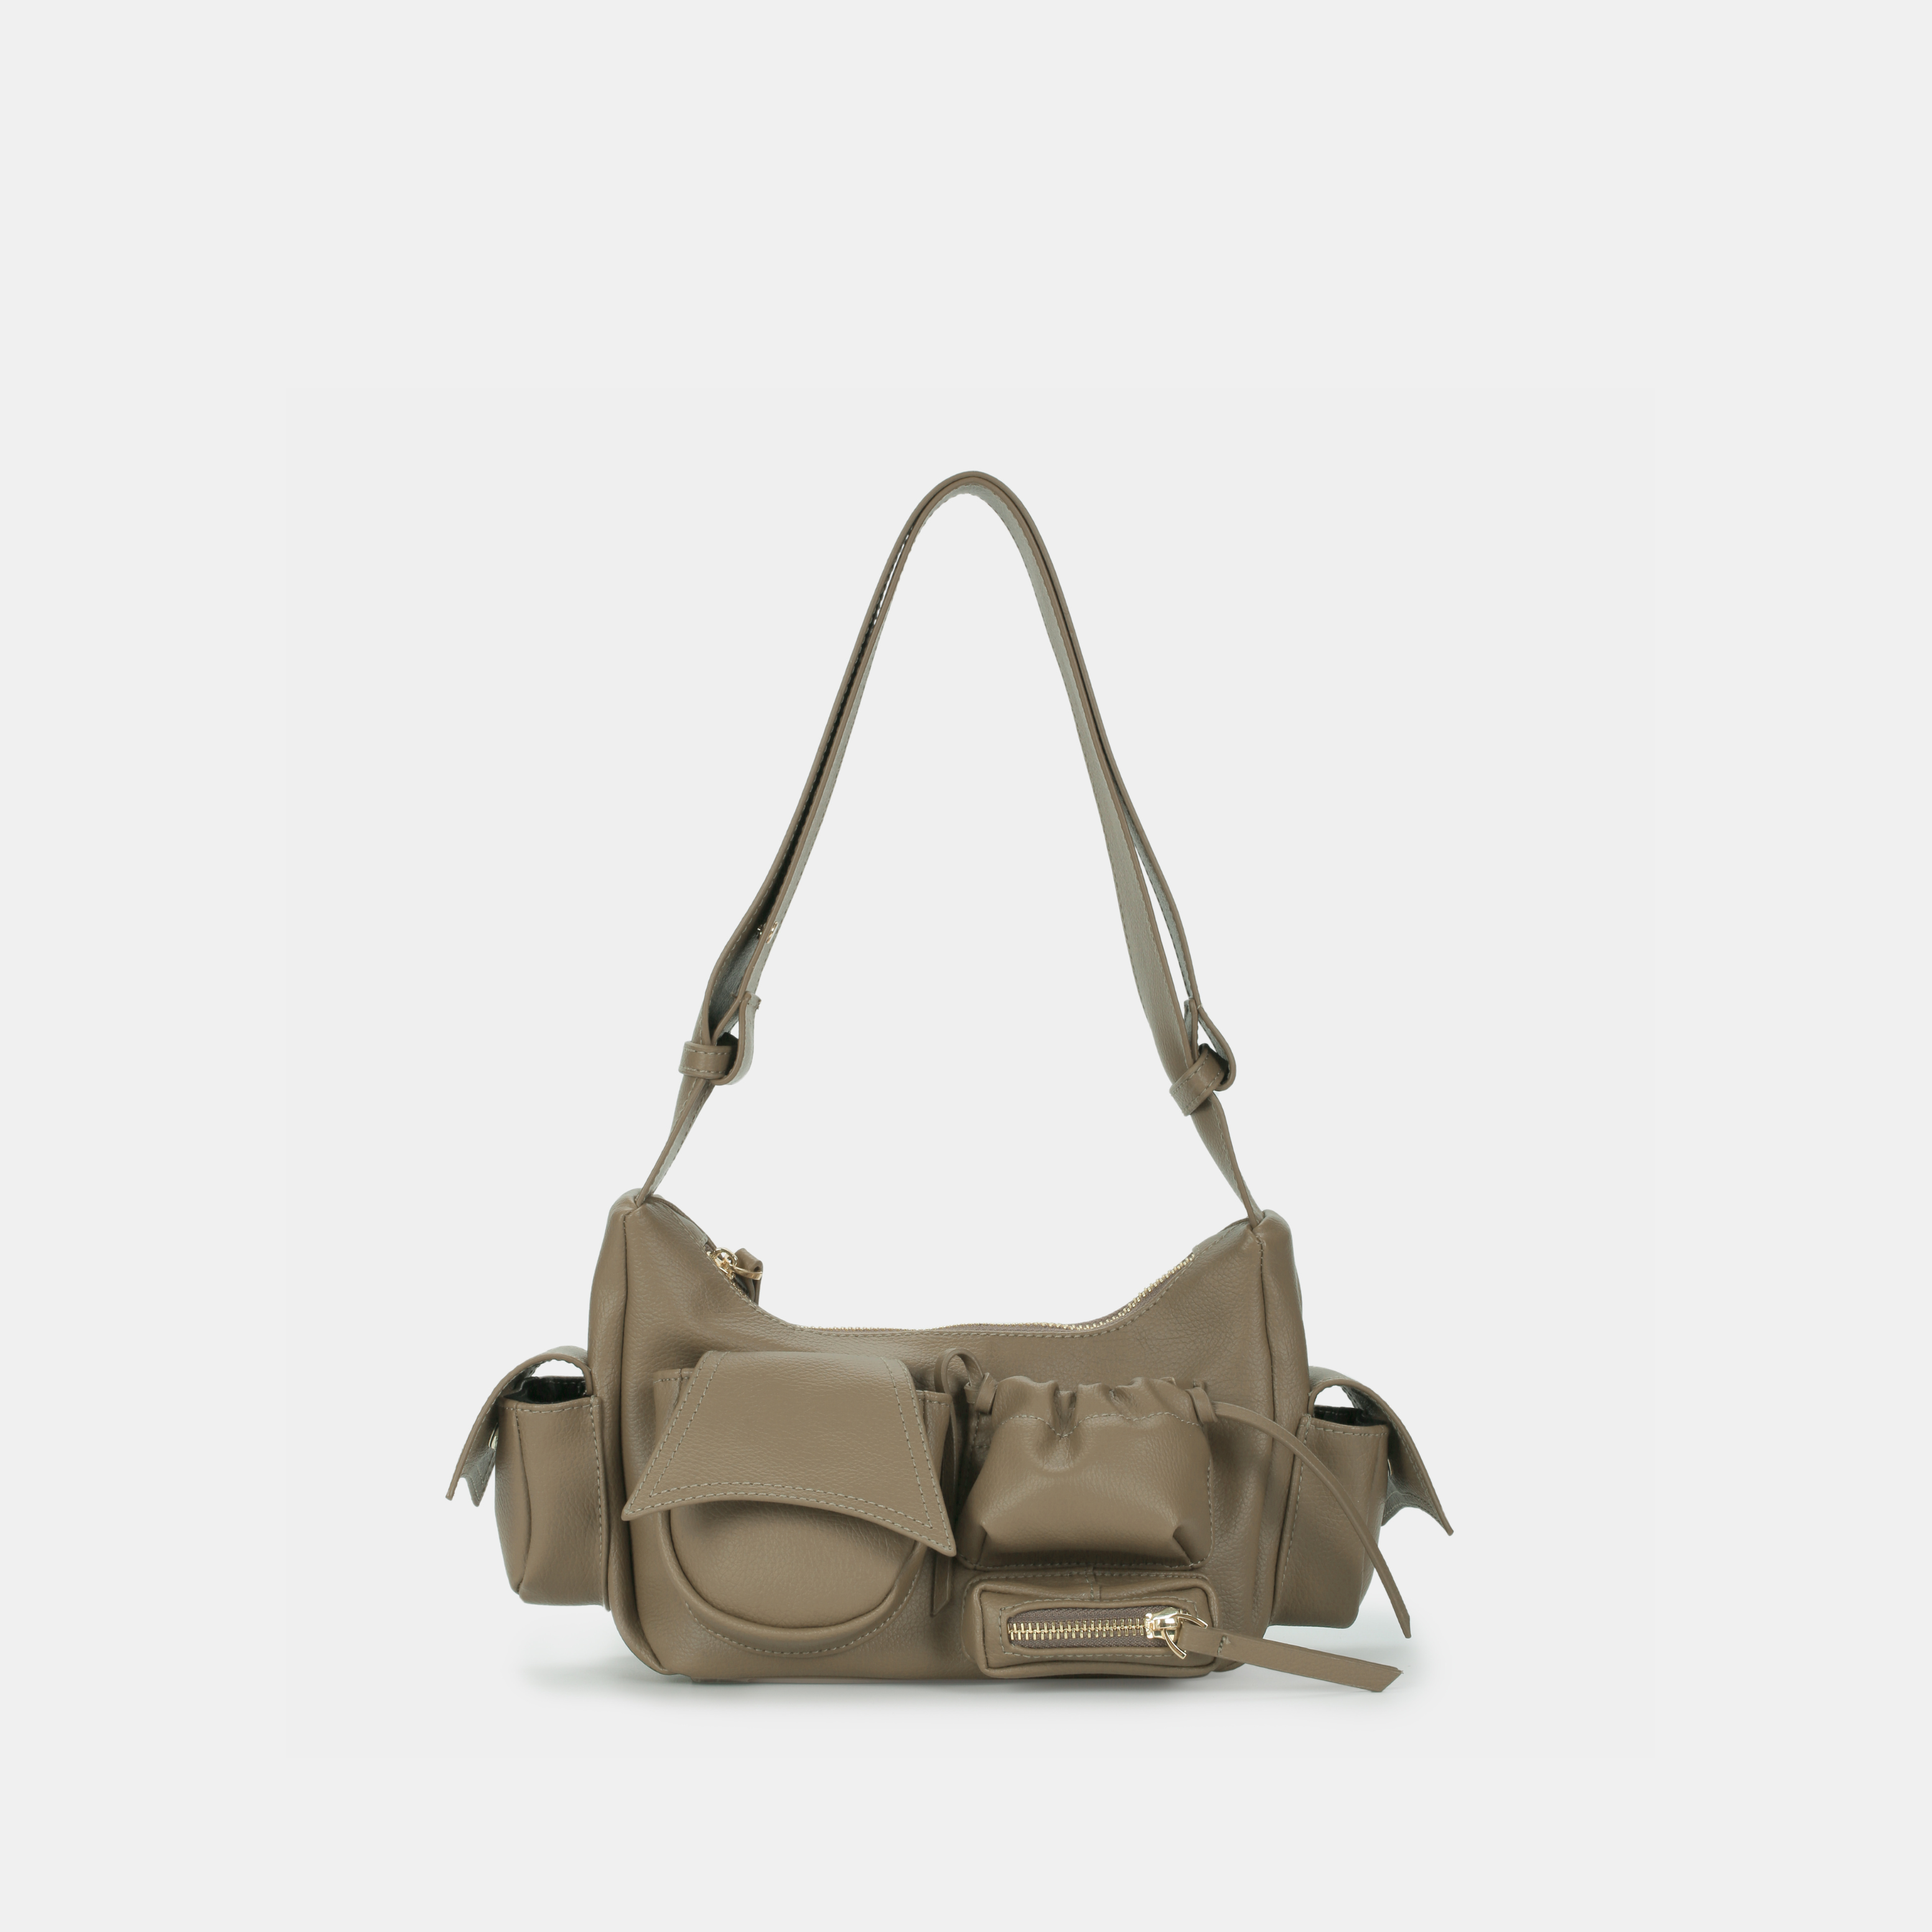 Handbag C5-Pocket size S in Dark Beige